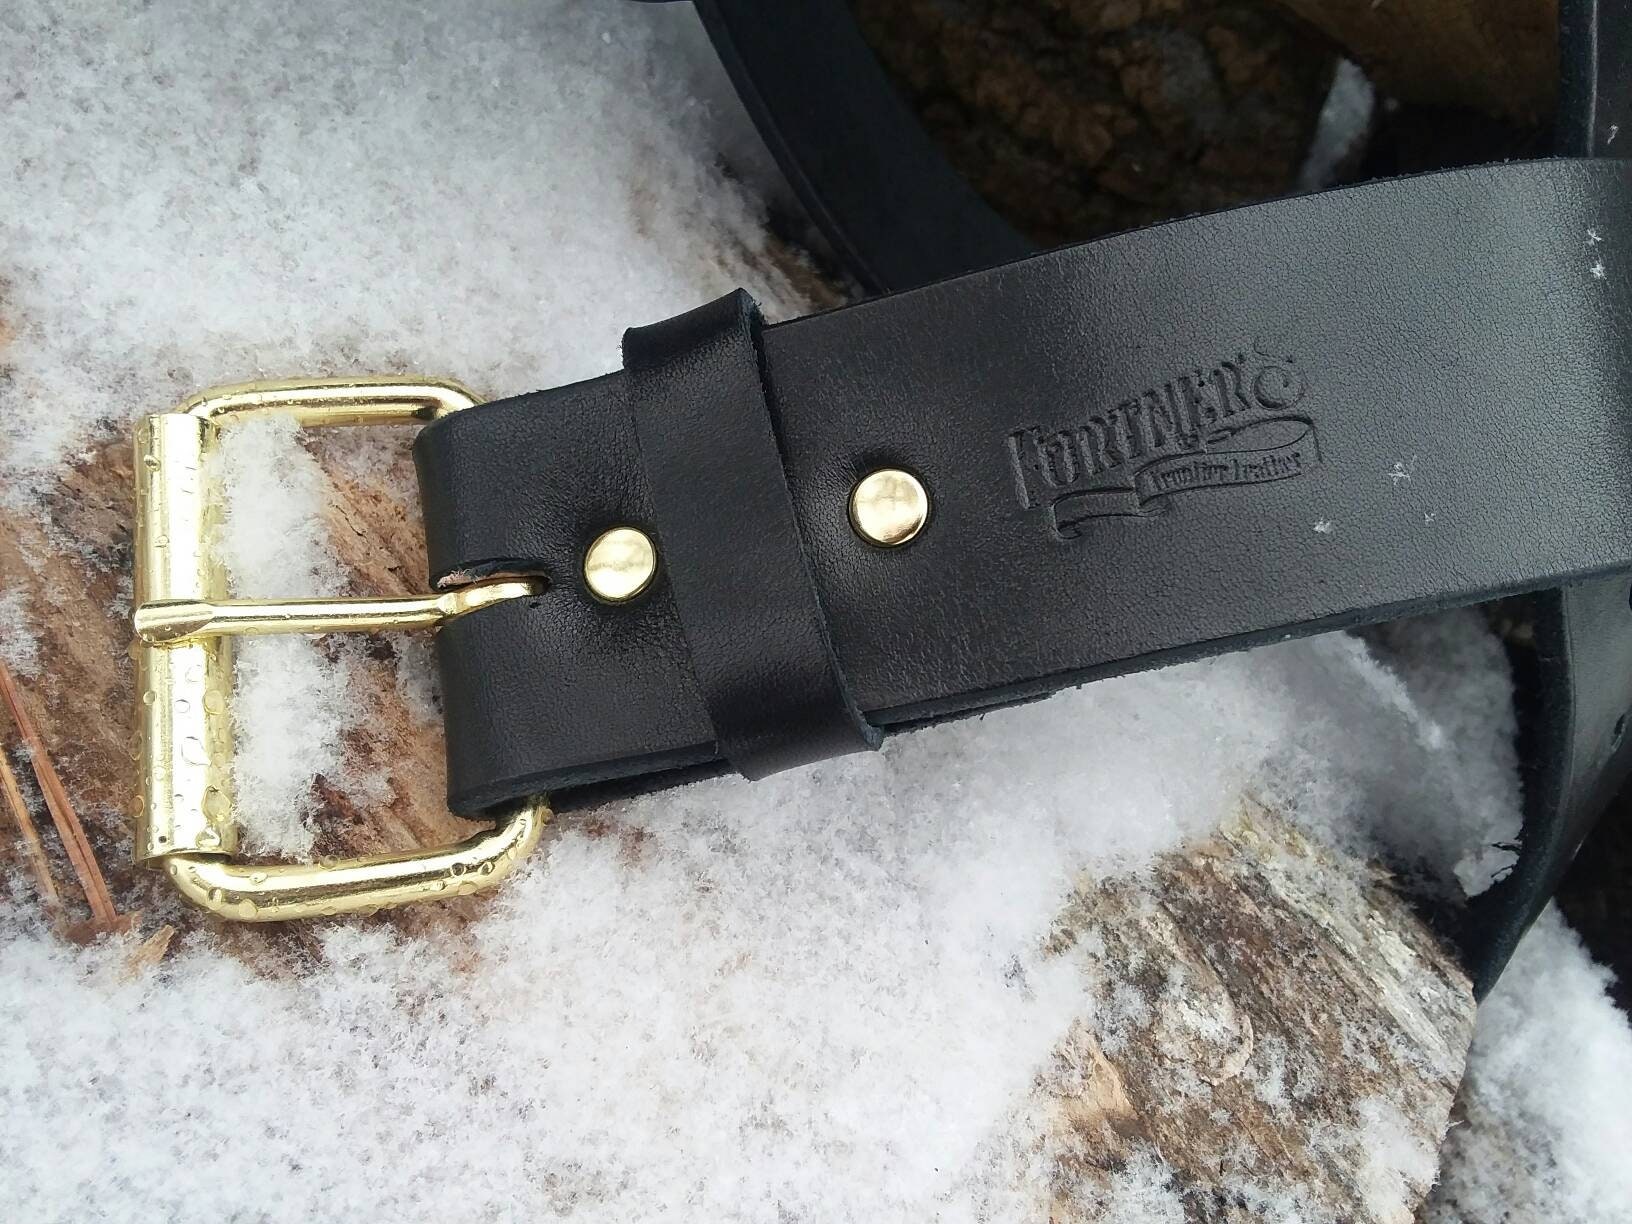 Single Action Revolver Holster and Belt Rig – Fortner's Frontier Leather